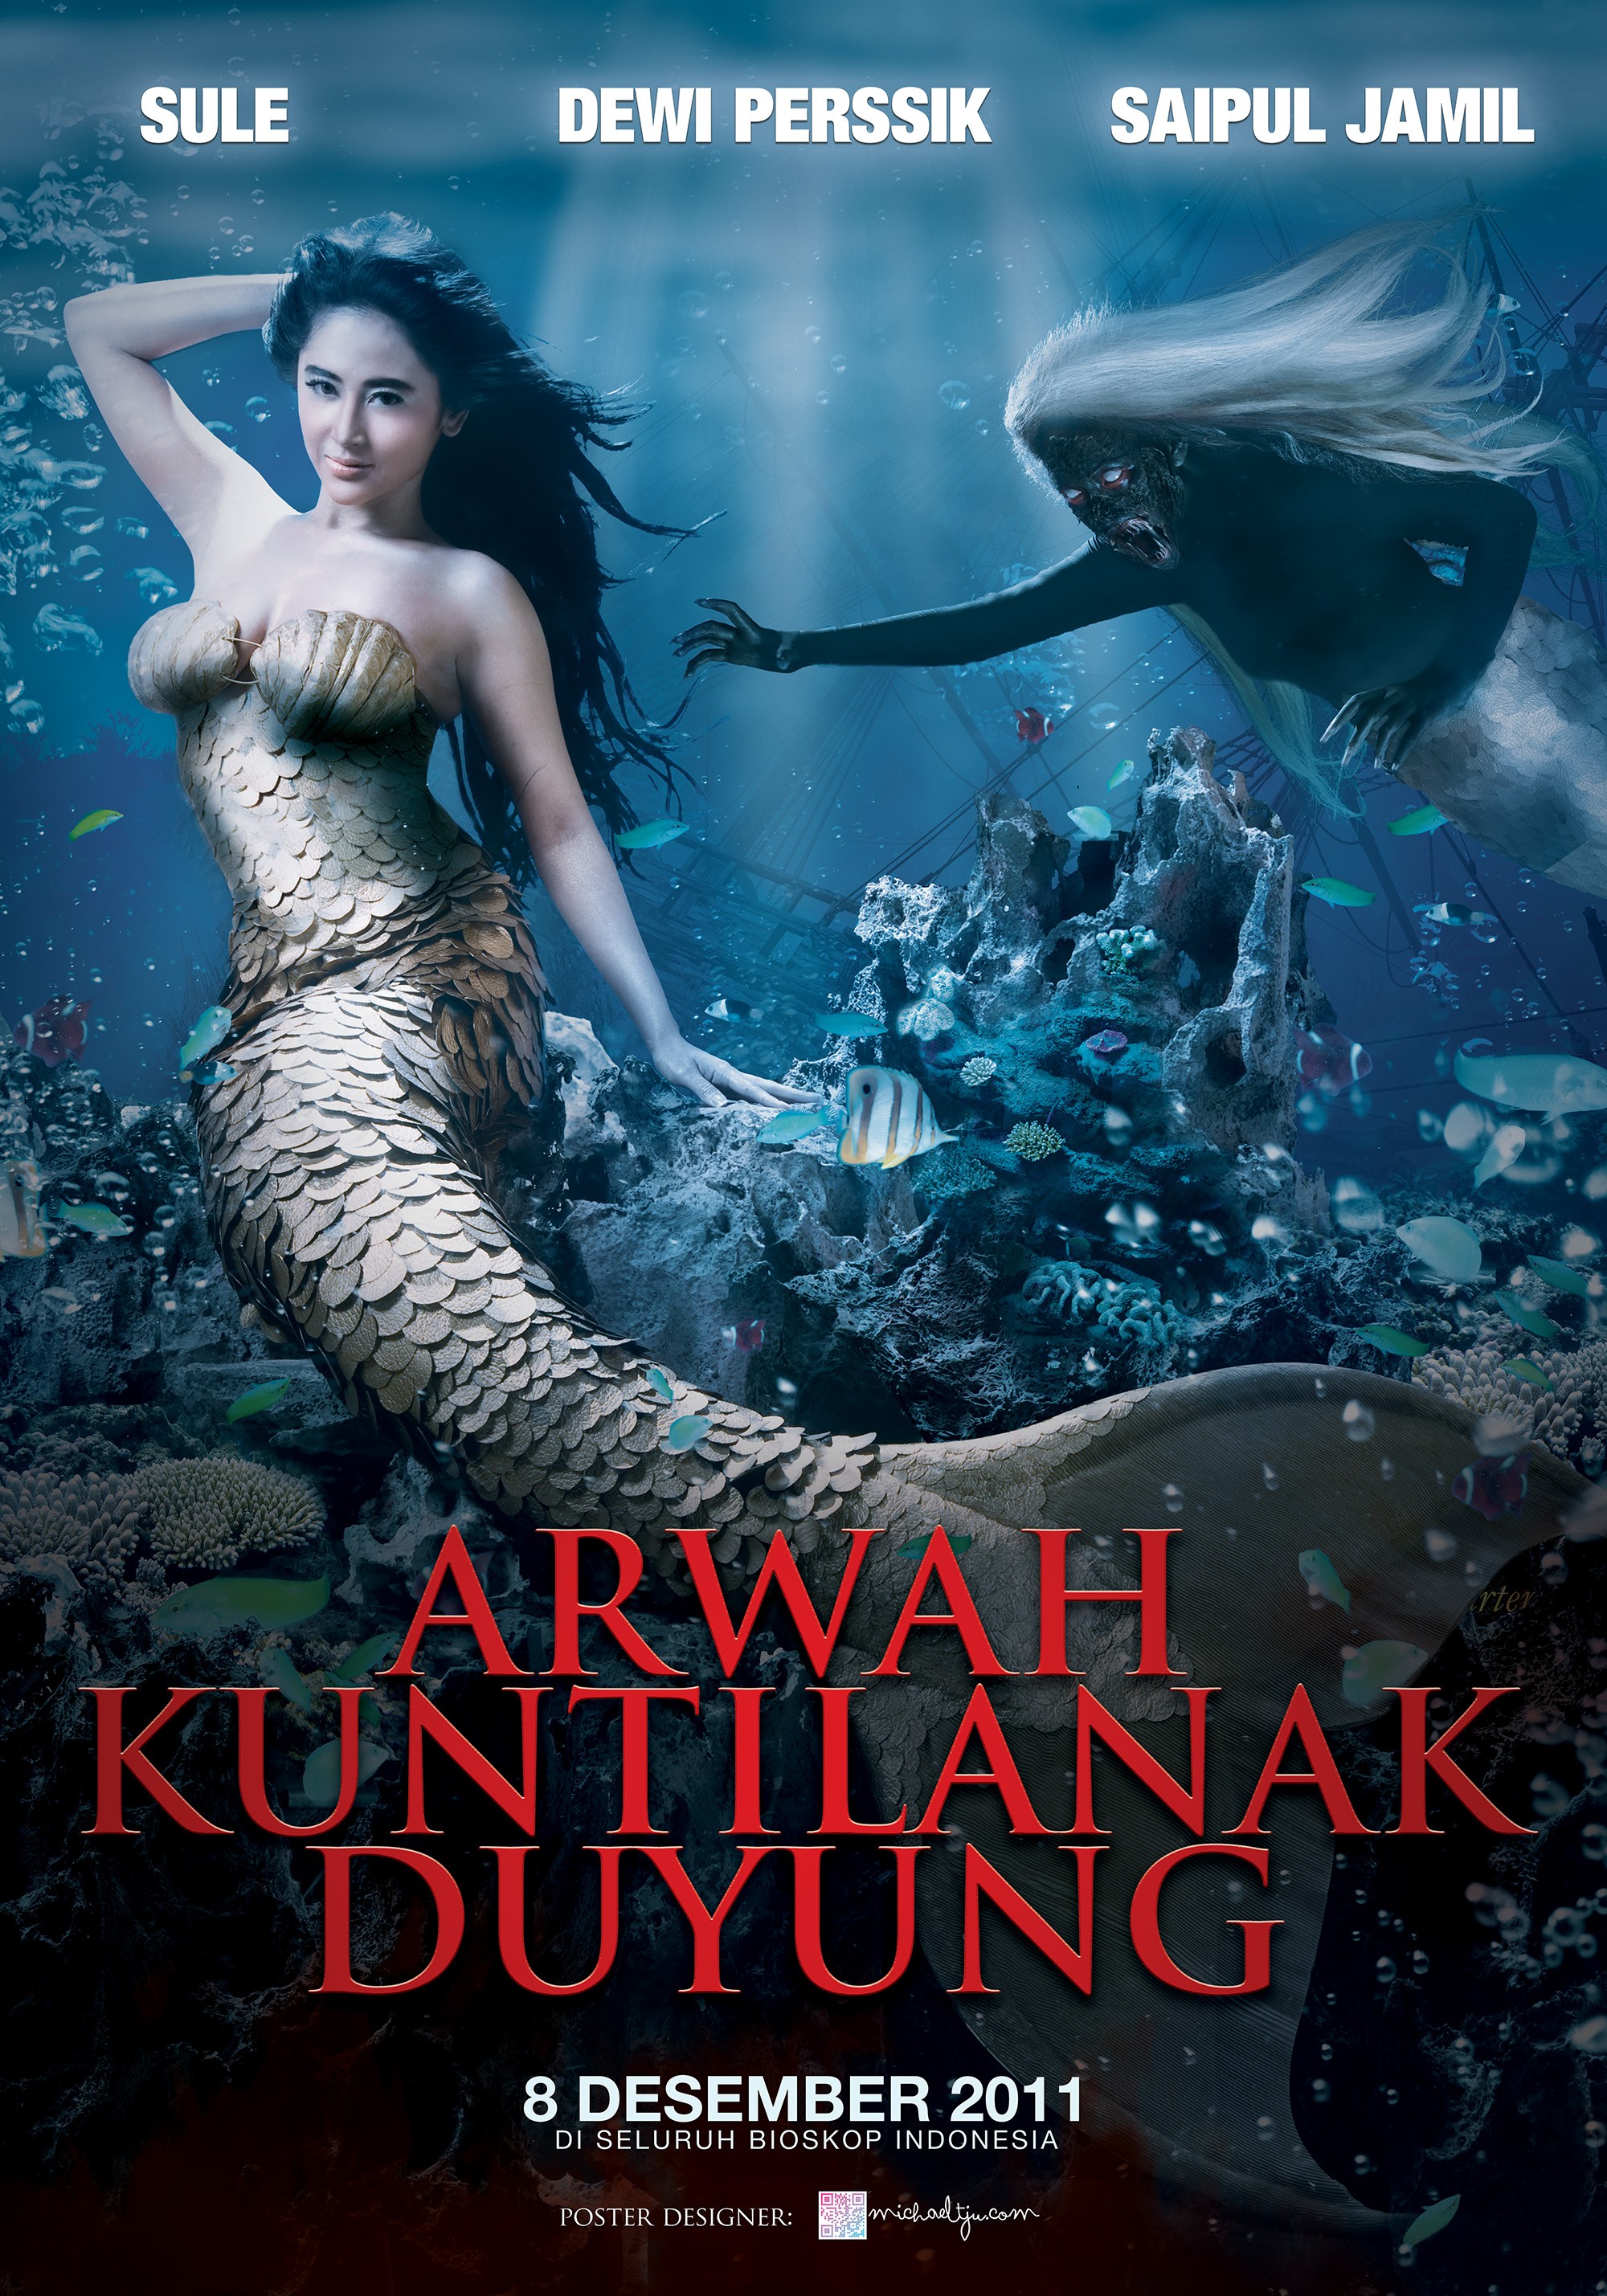 Mega Sized Movie Poster Image for Arwah kuntilanak duyung 